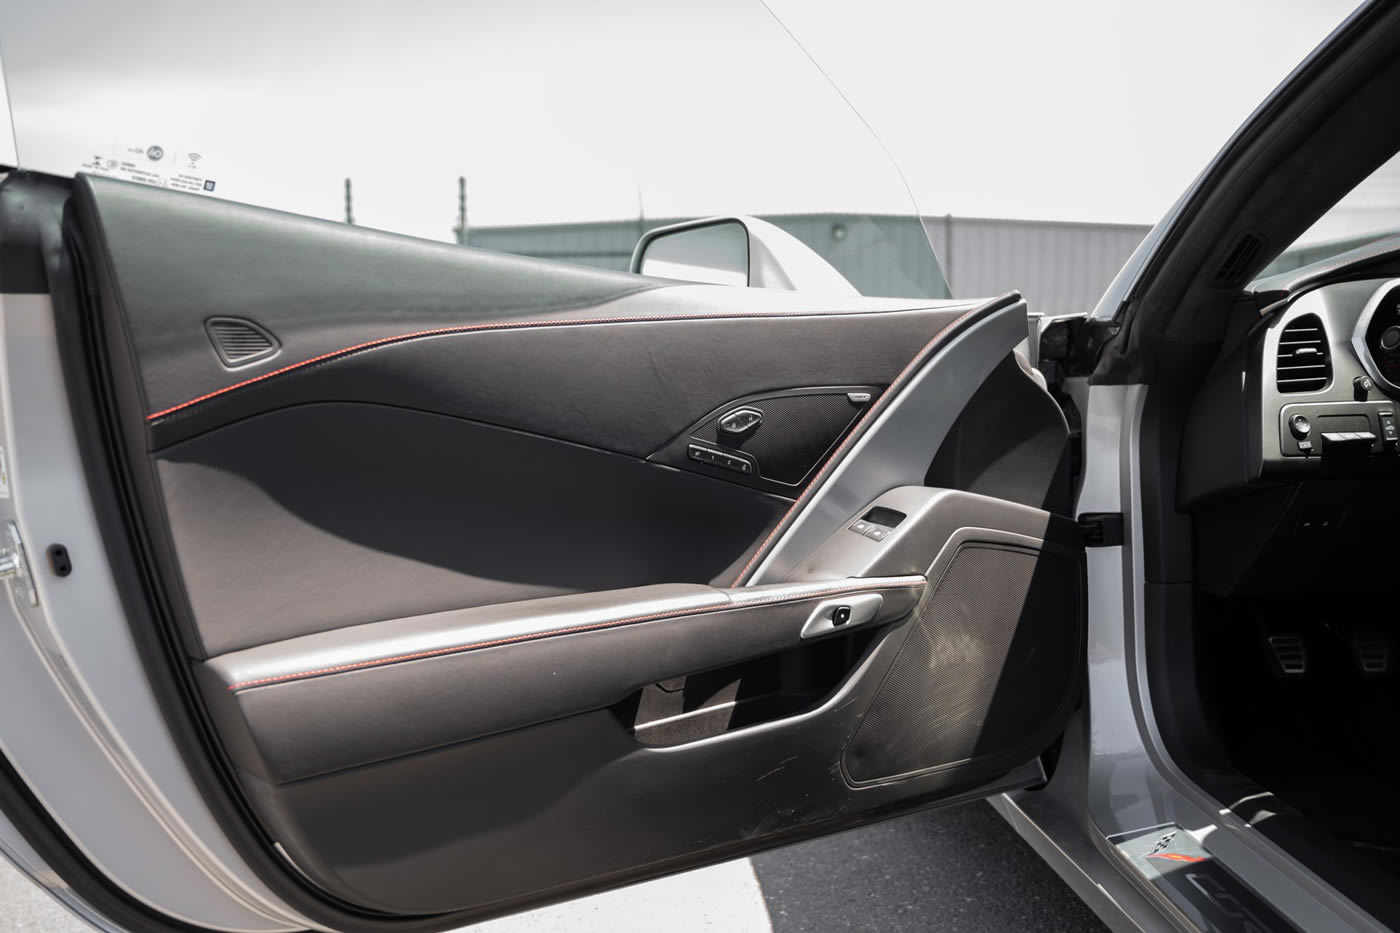 2016 Corvette Z06 Convertible 3LZ 7-Speed in Blade Silver Metallic